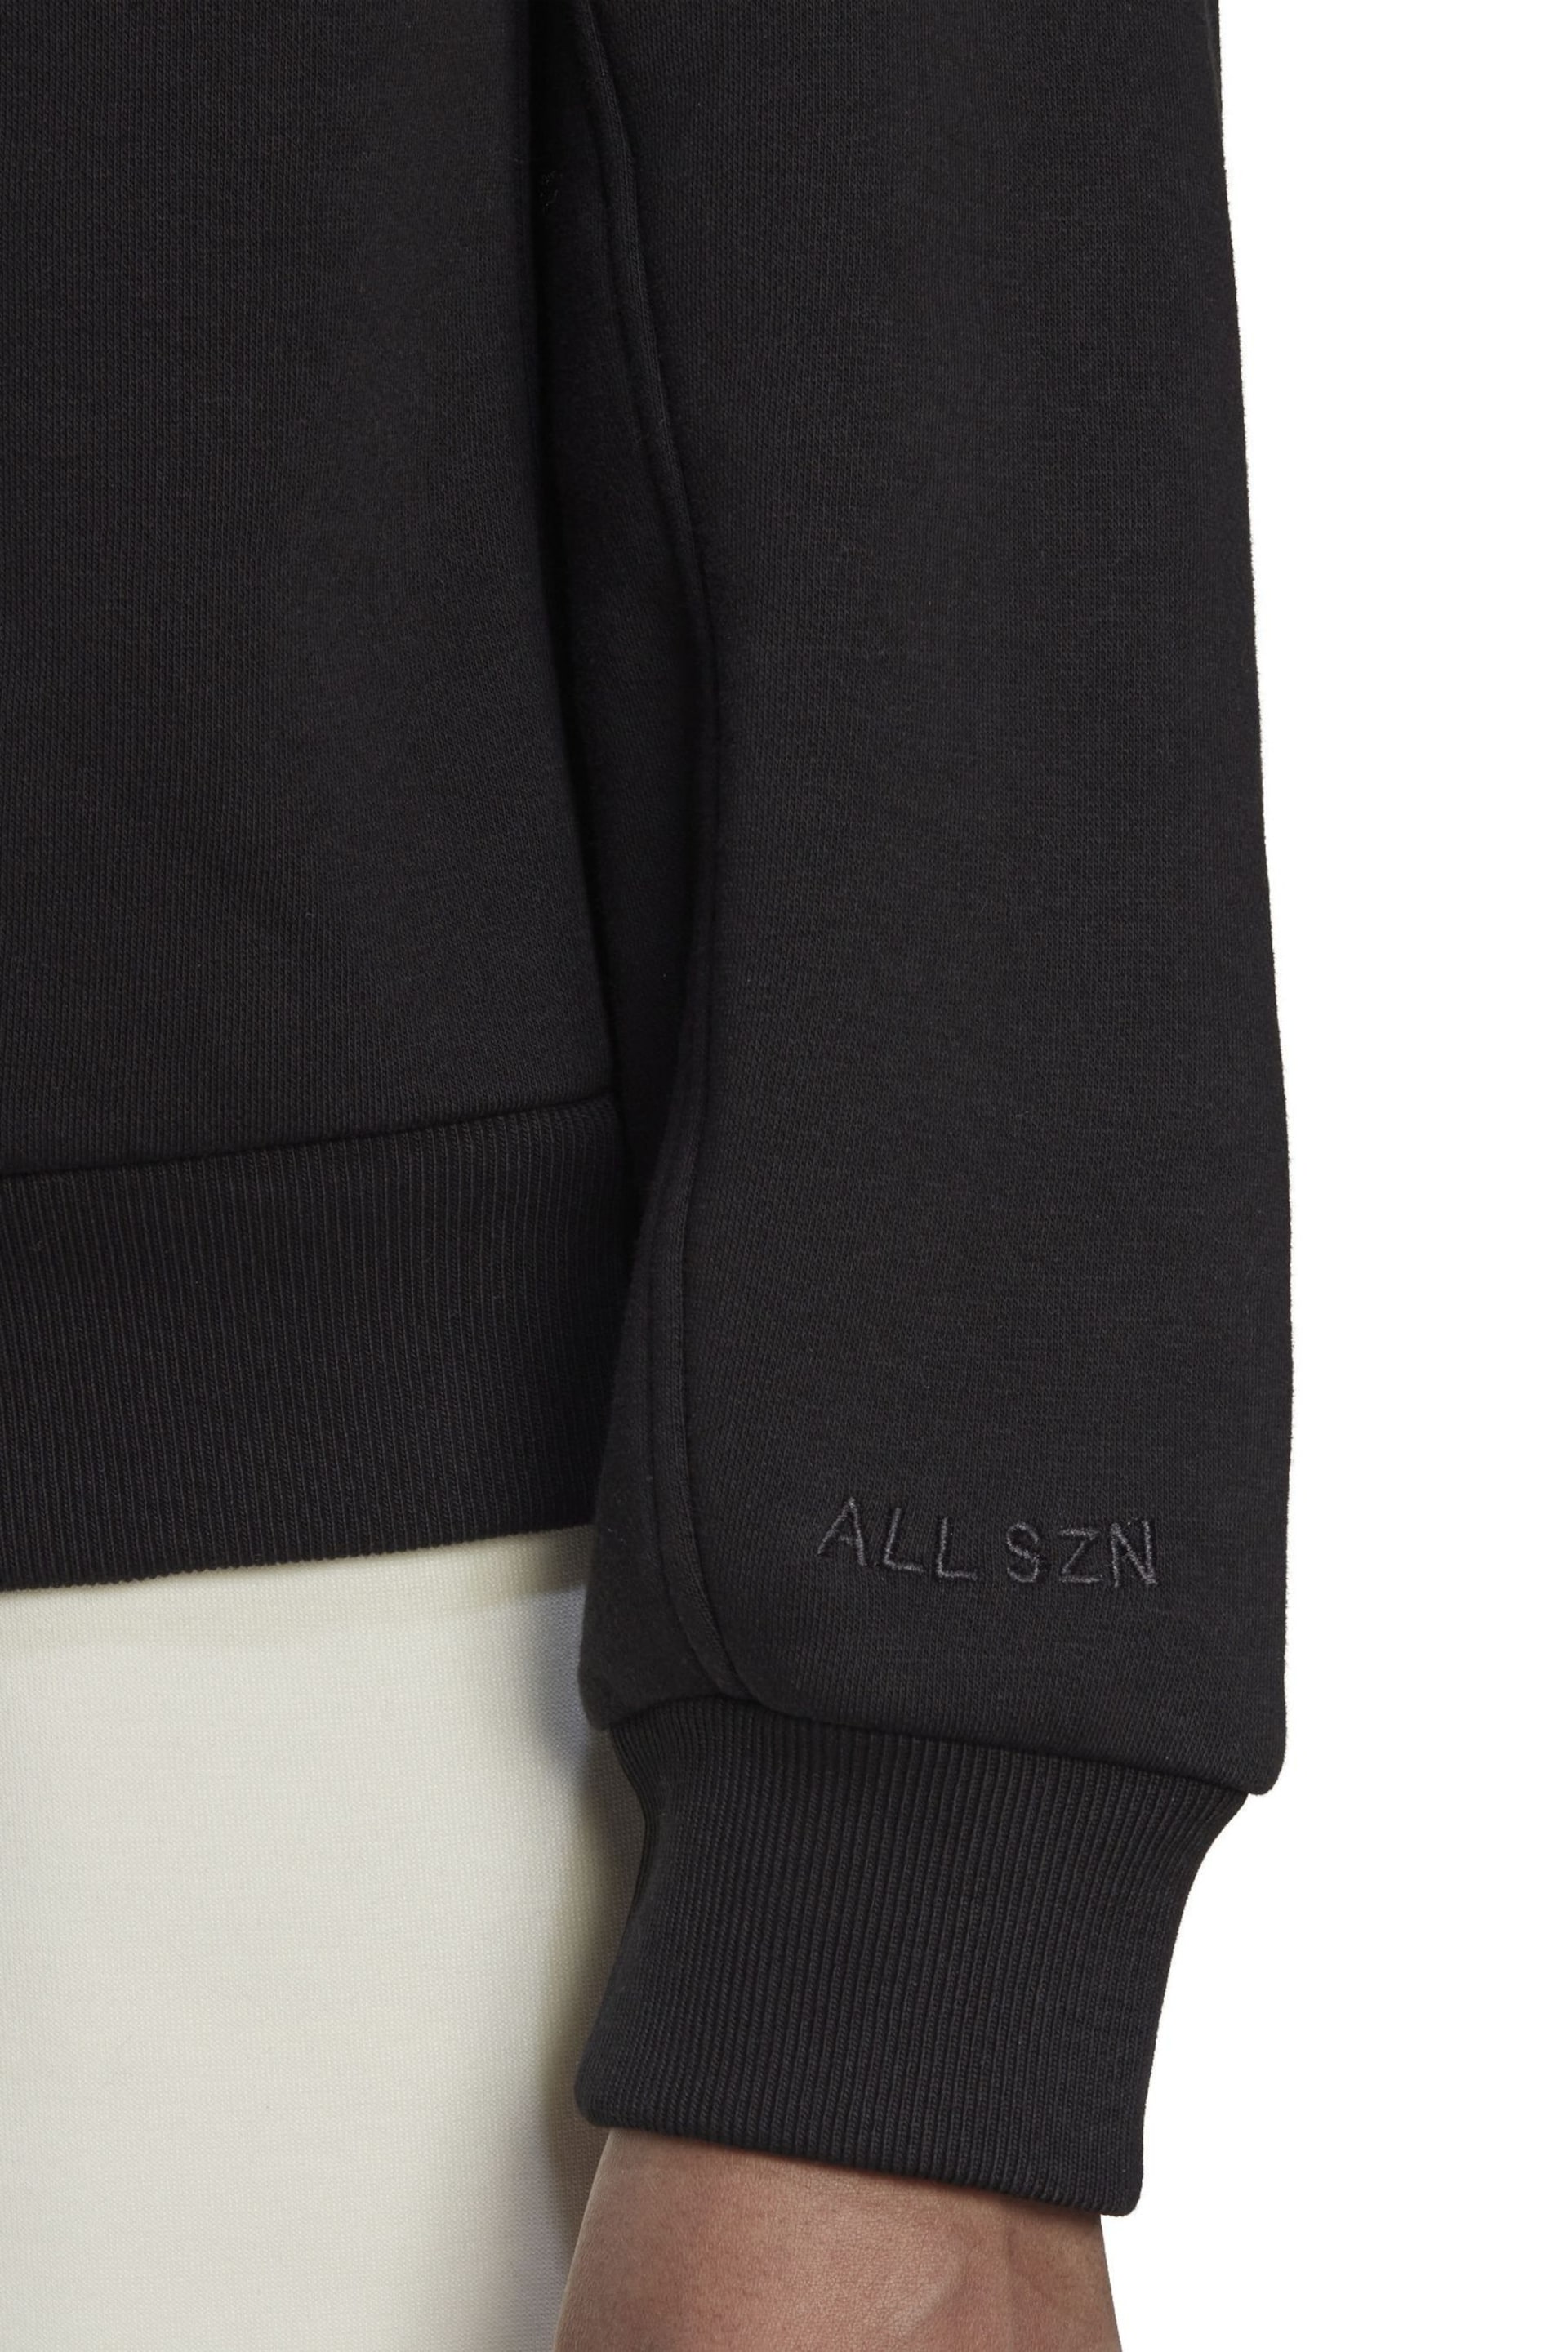 adidas Black Sportswear All Szn Fleece Sweatshirt - Image 6 of 7